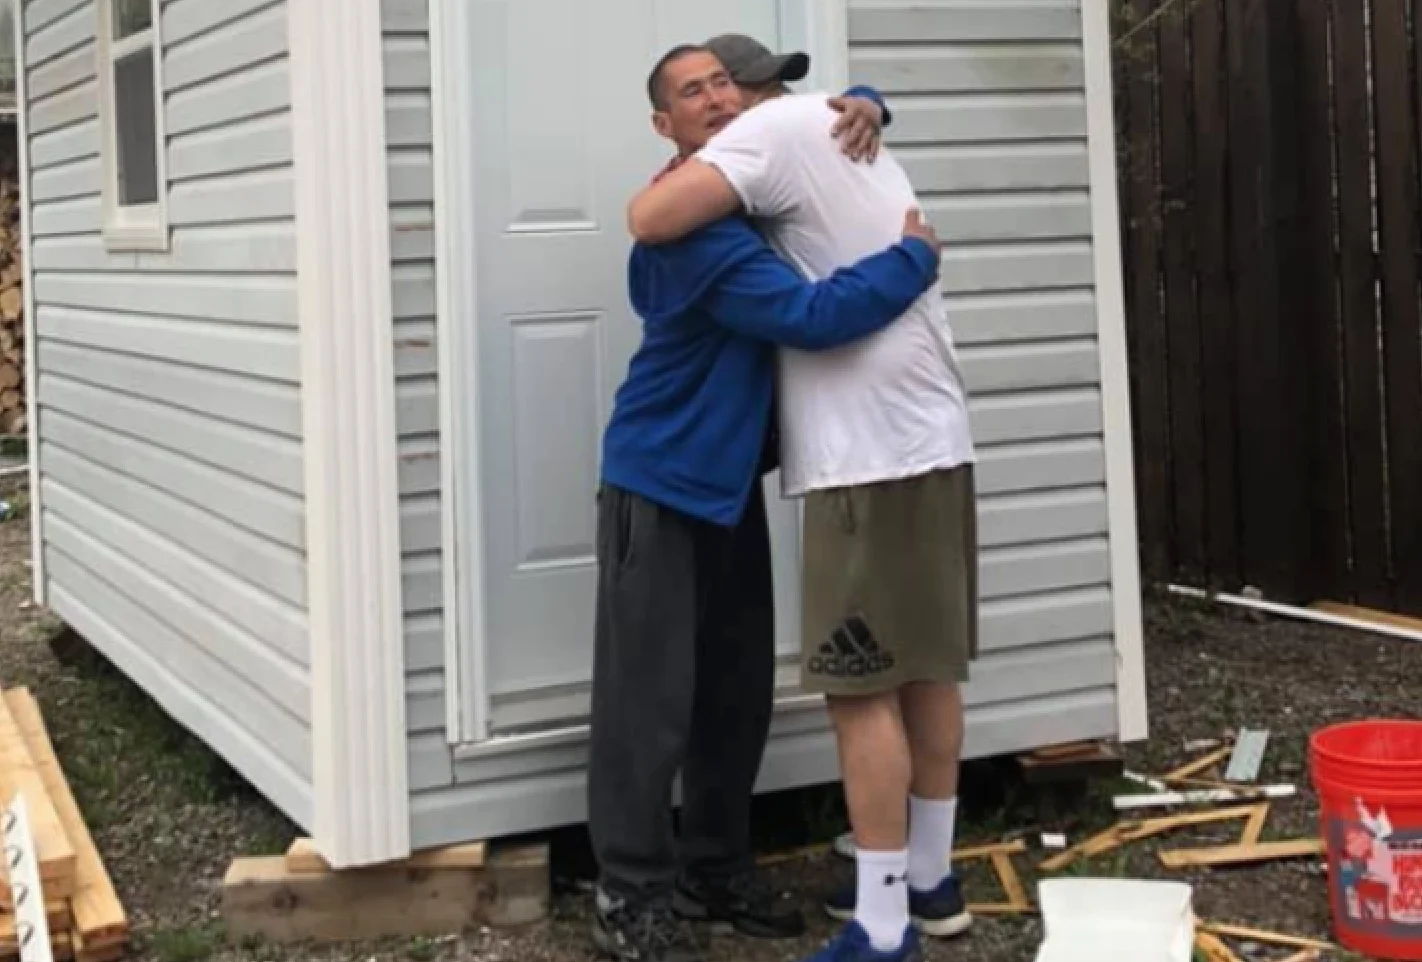 Emergency shelter built for homeless Nova Scotia man in heartwarming story